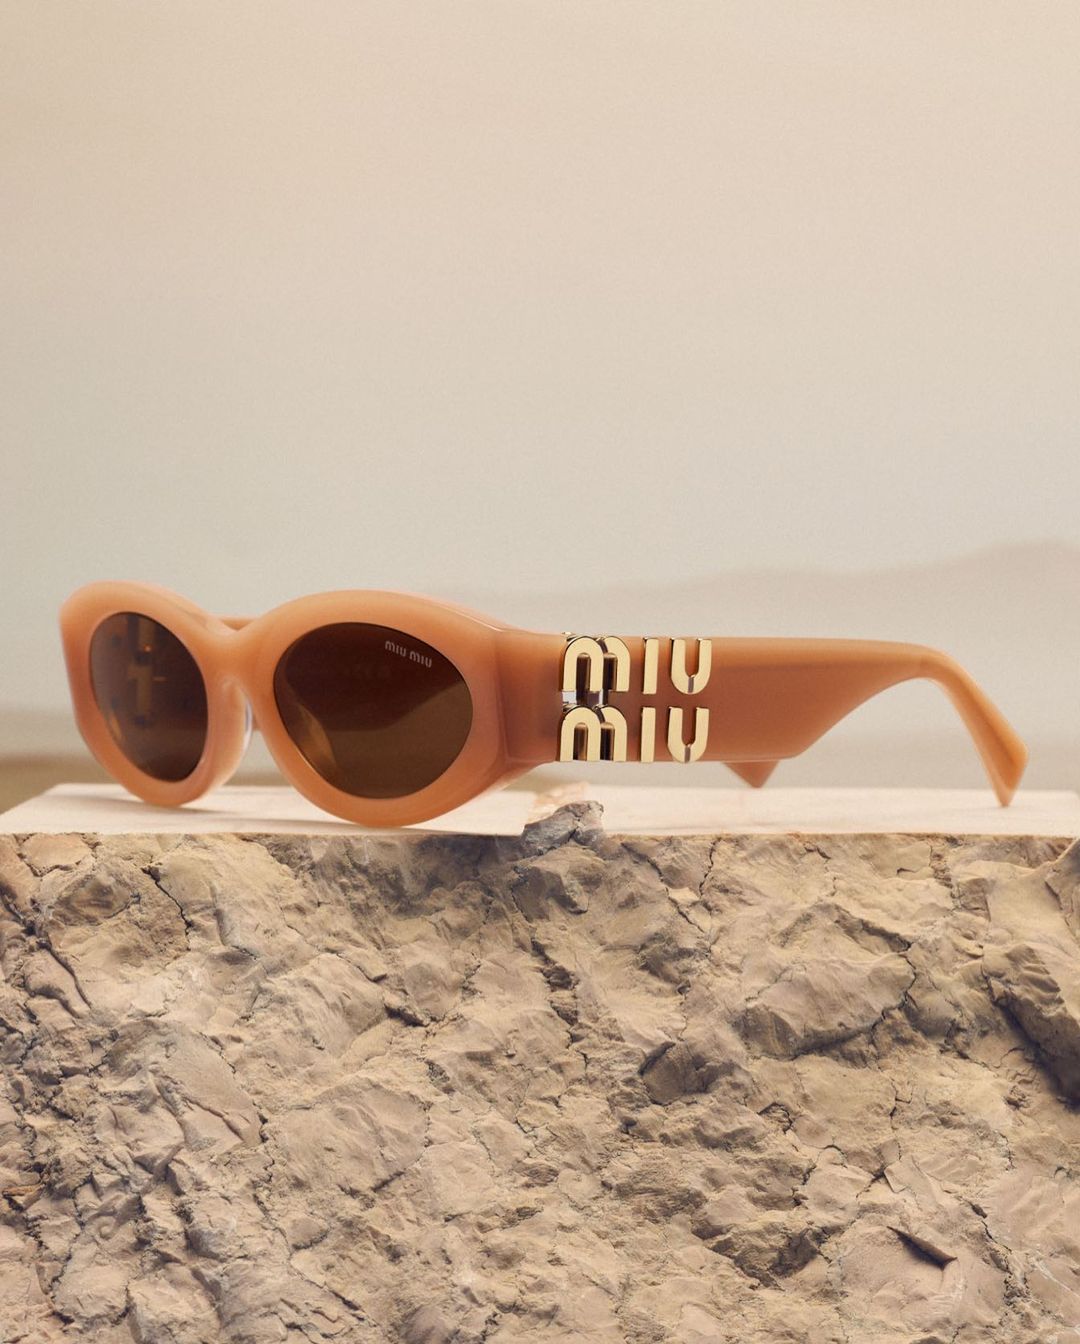 Sunglasses from Sunglass Hut